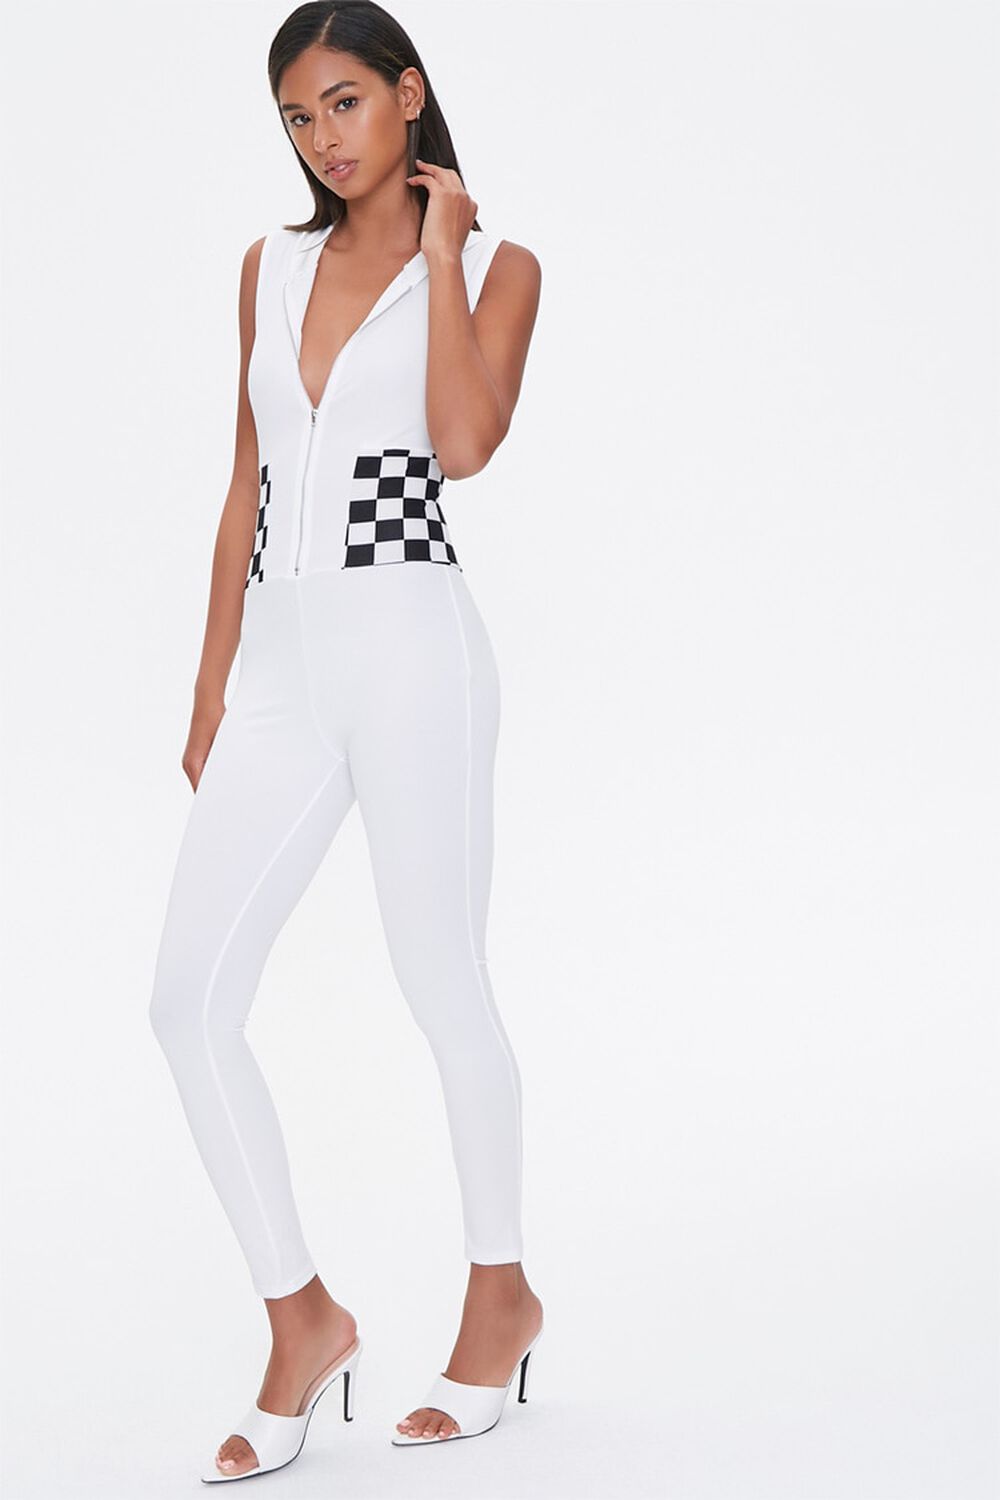 WHITE/BLACK Hooded Checker Jumpsuit, image 1